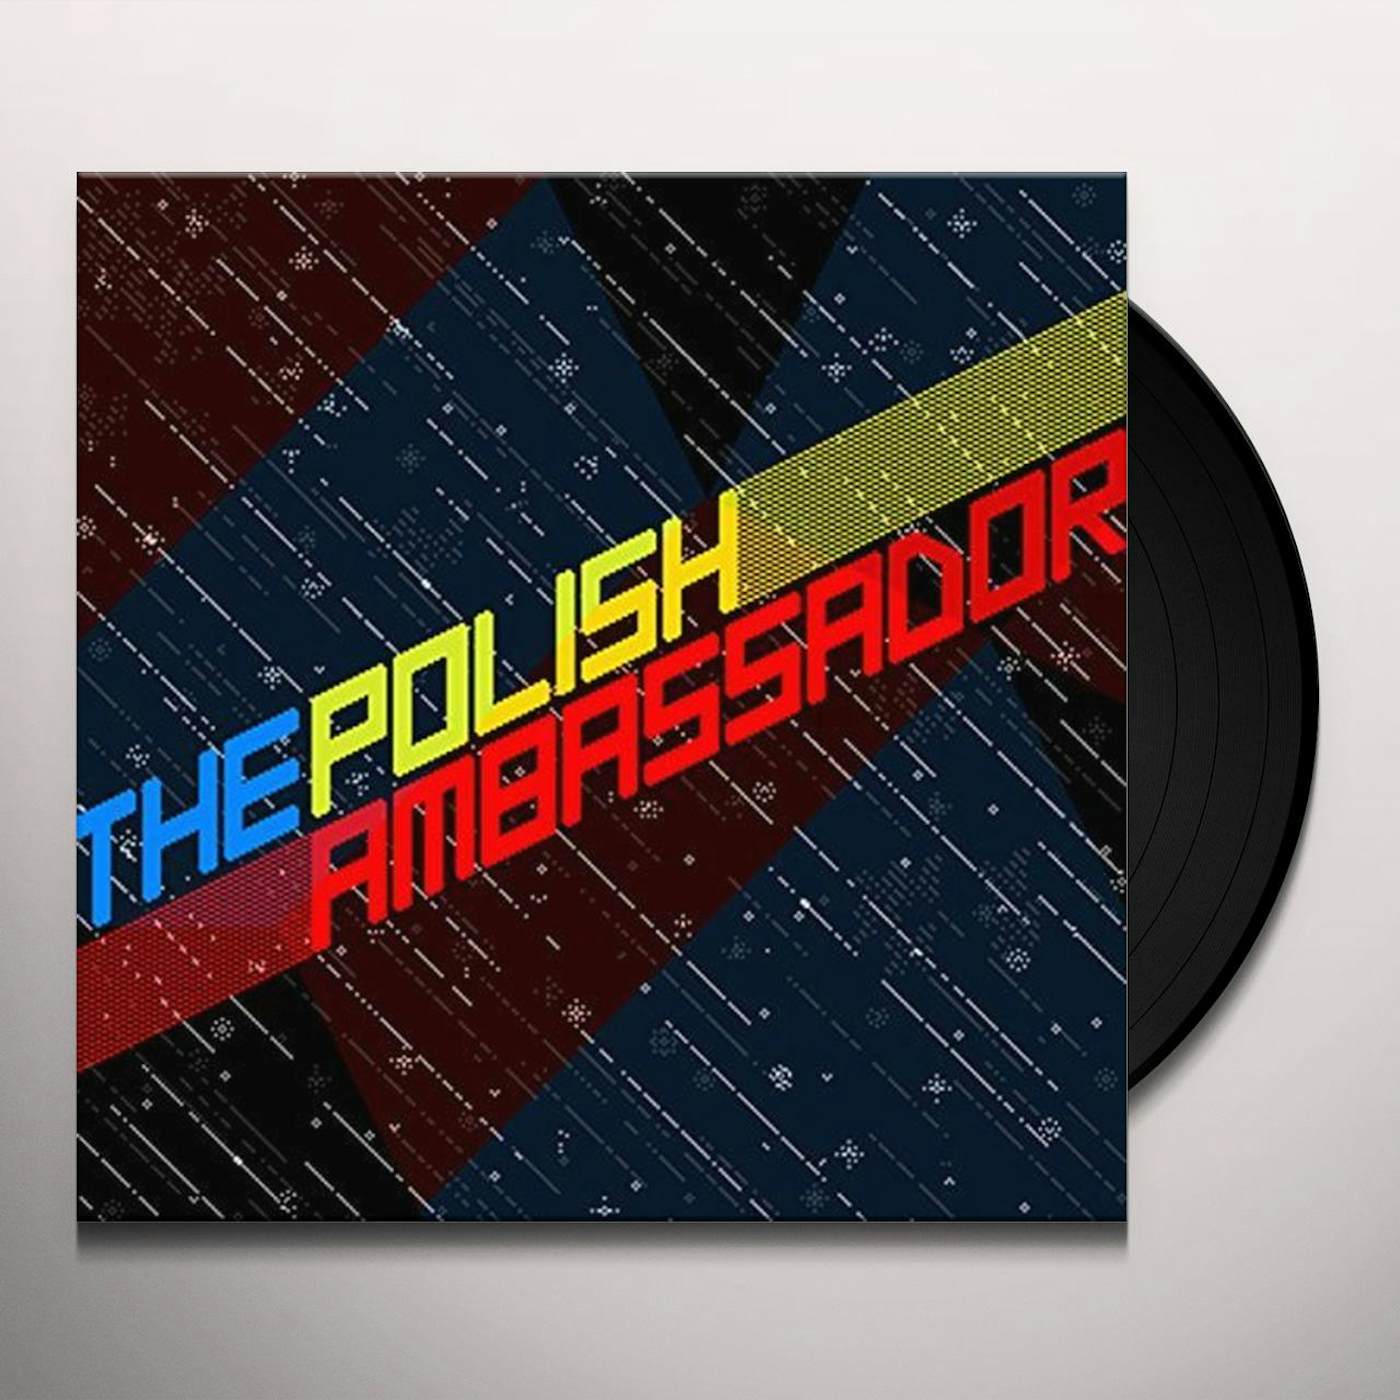 The Polish Ambassador Diplomatic Immunity Vinyl Record